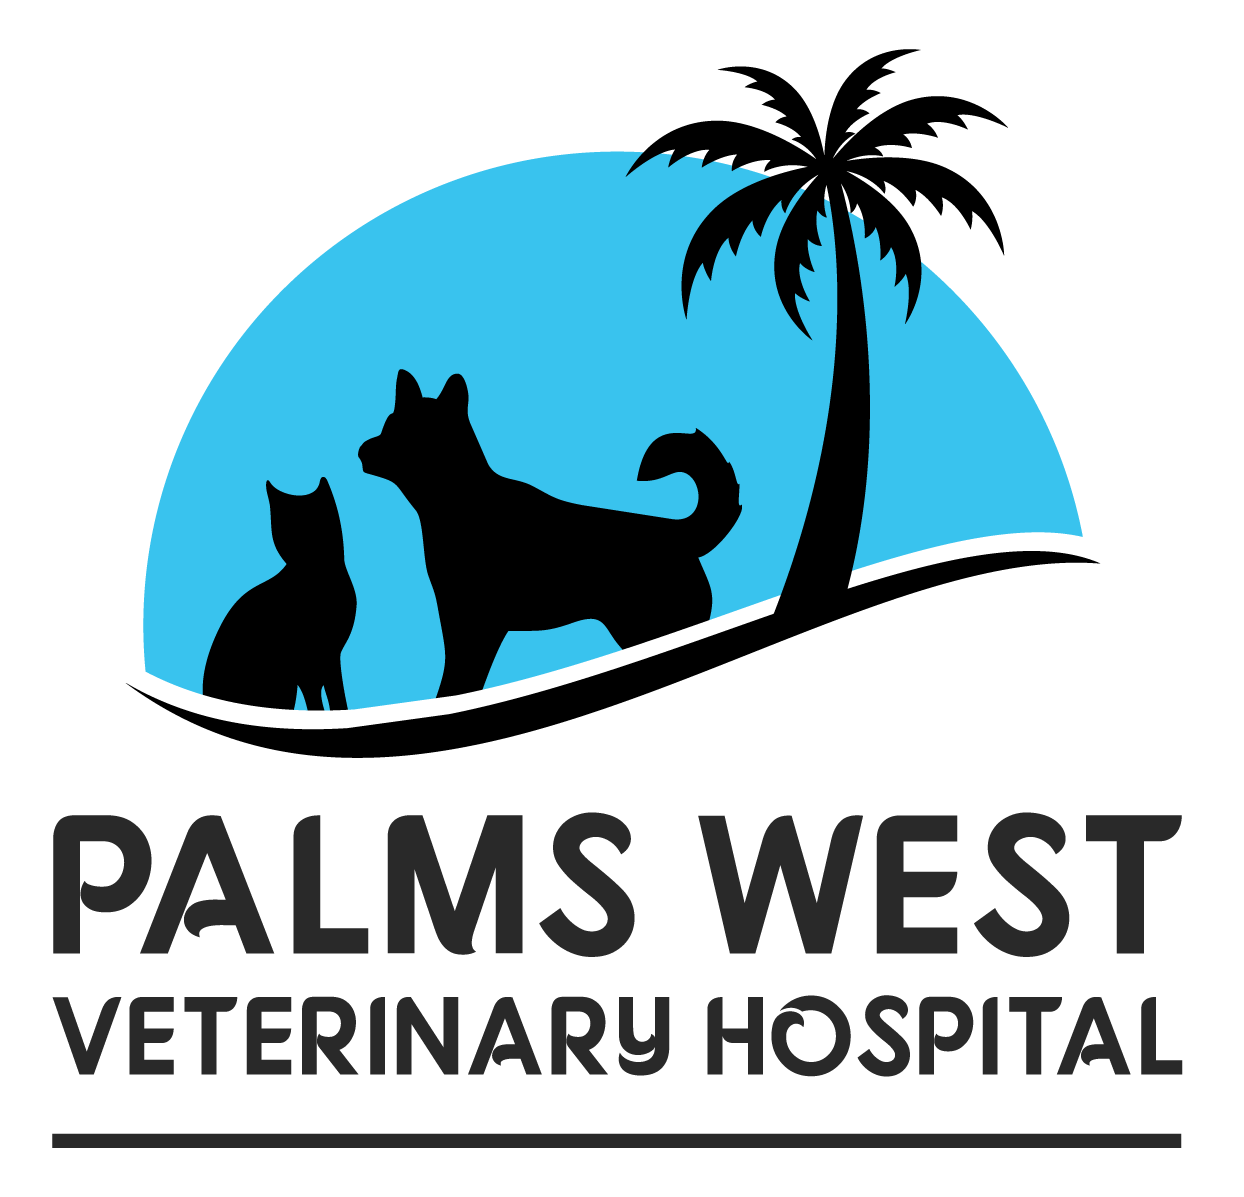 Palms West Veterinary Hospital